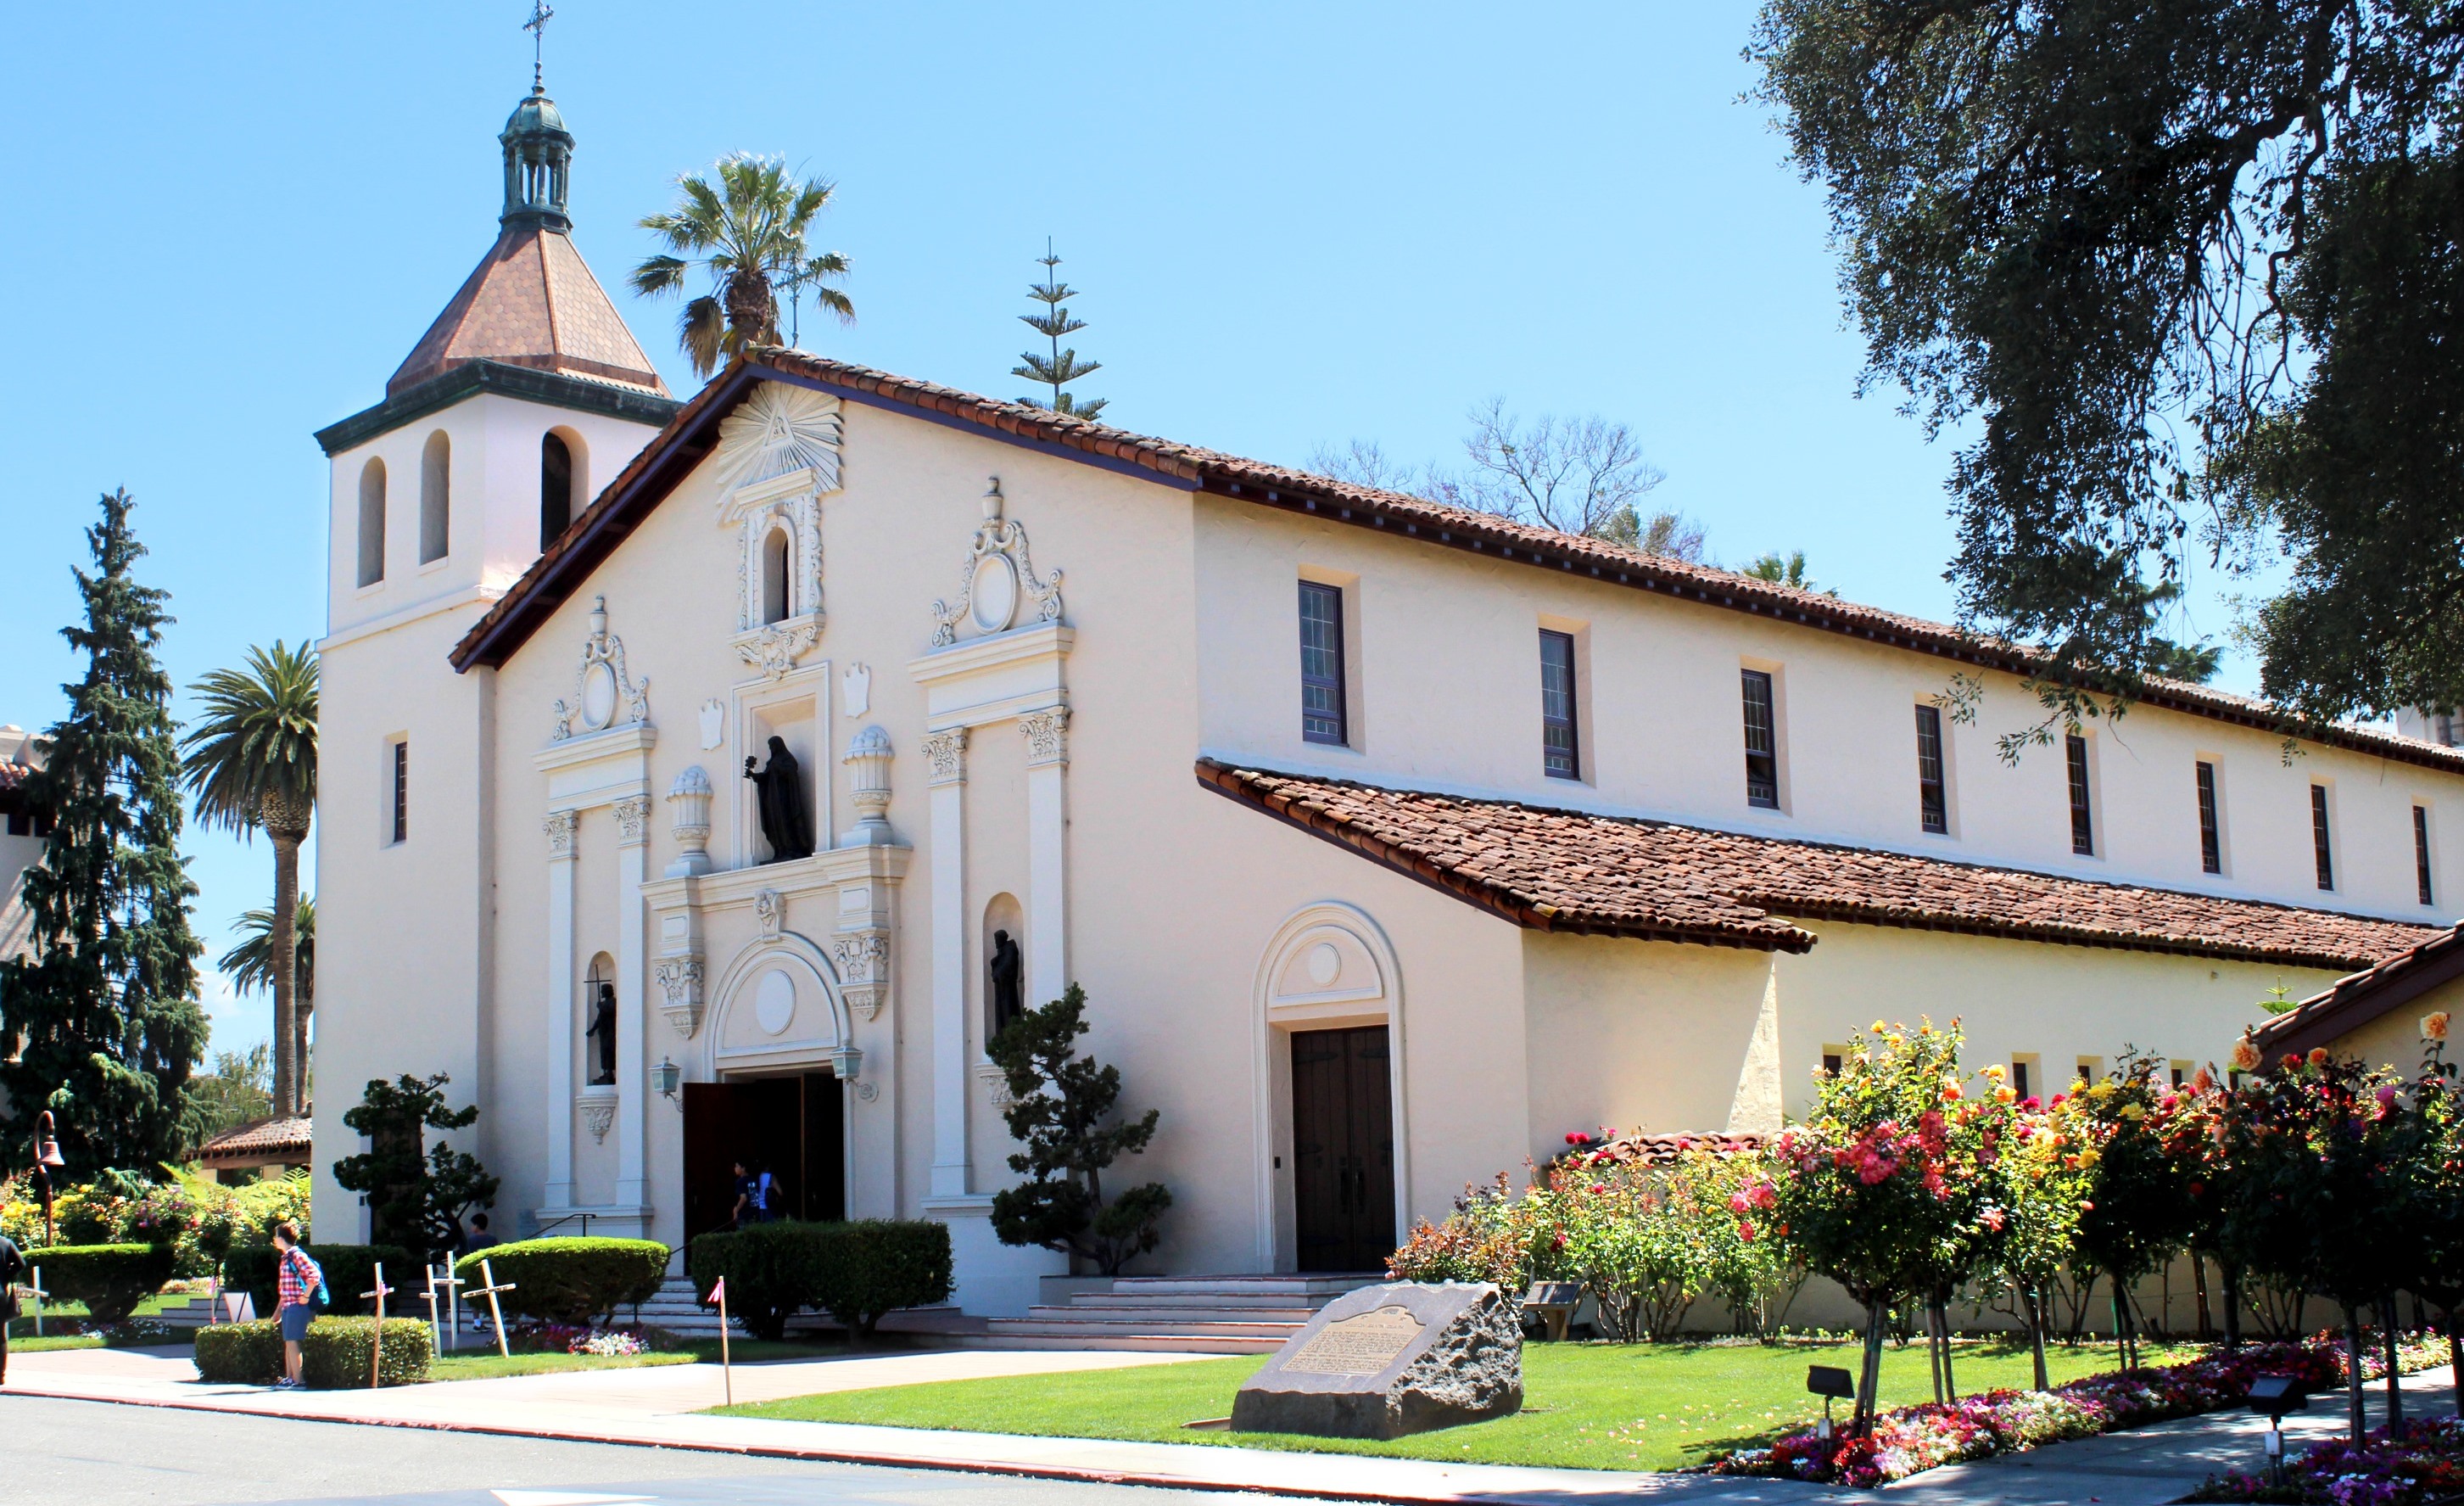 Santa_Clara,_CA_USA_-_Santa_Clara_University,_Mission_Santa_Clara_de_Asis_-_panoramio_(2)_(cropped)